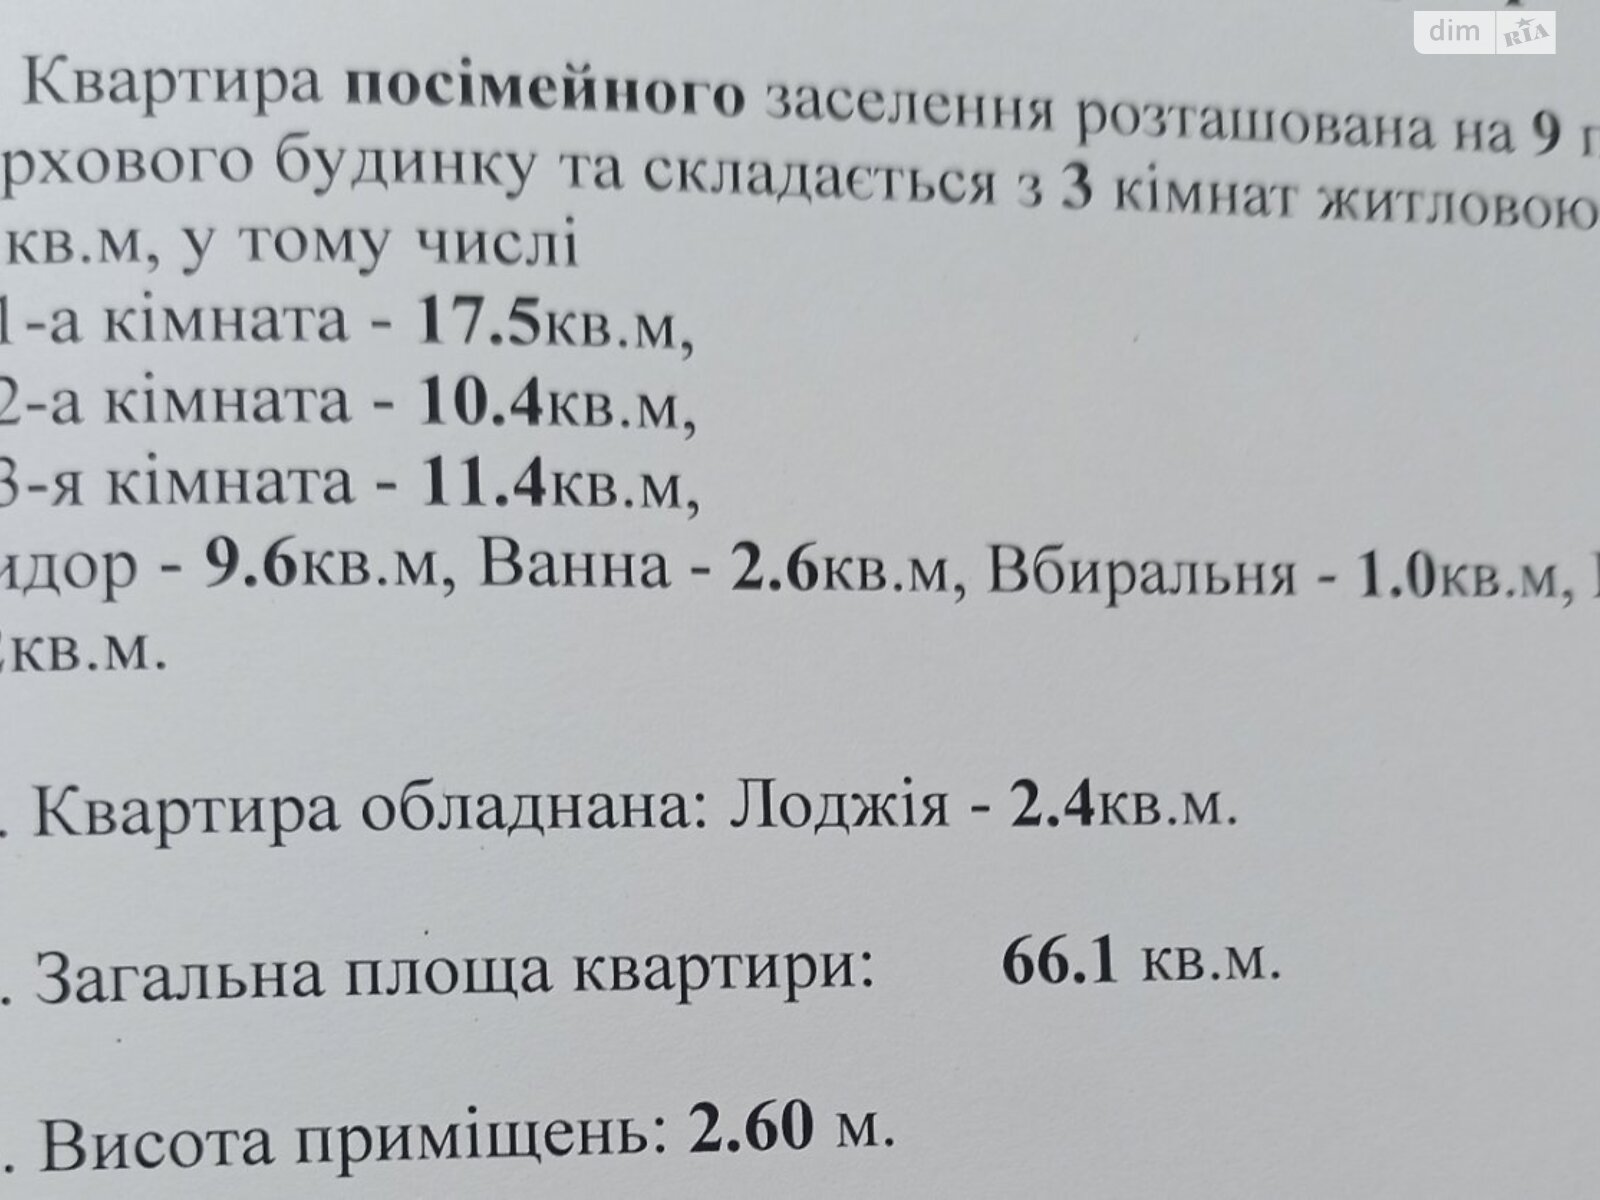 Продажа трехкомнатной квартиры в Николаеве, на ул. Озерная, район Намыв фото 1